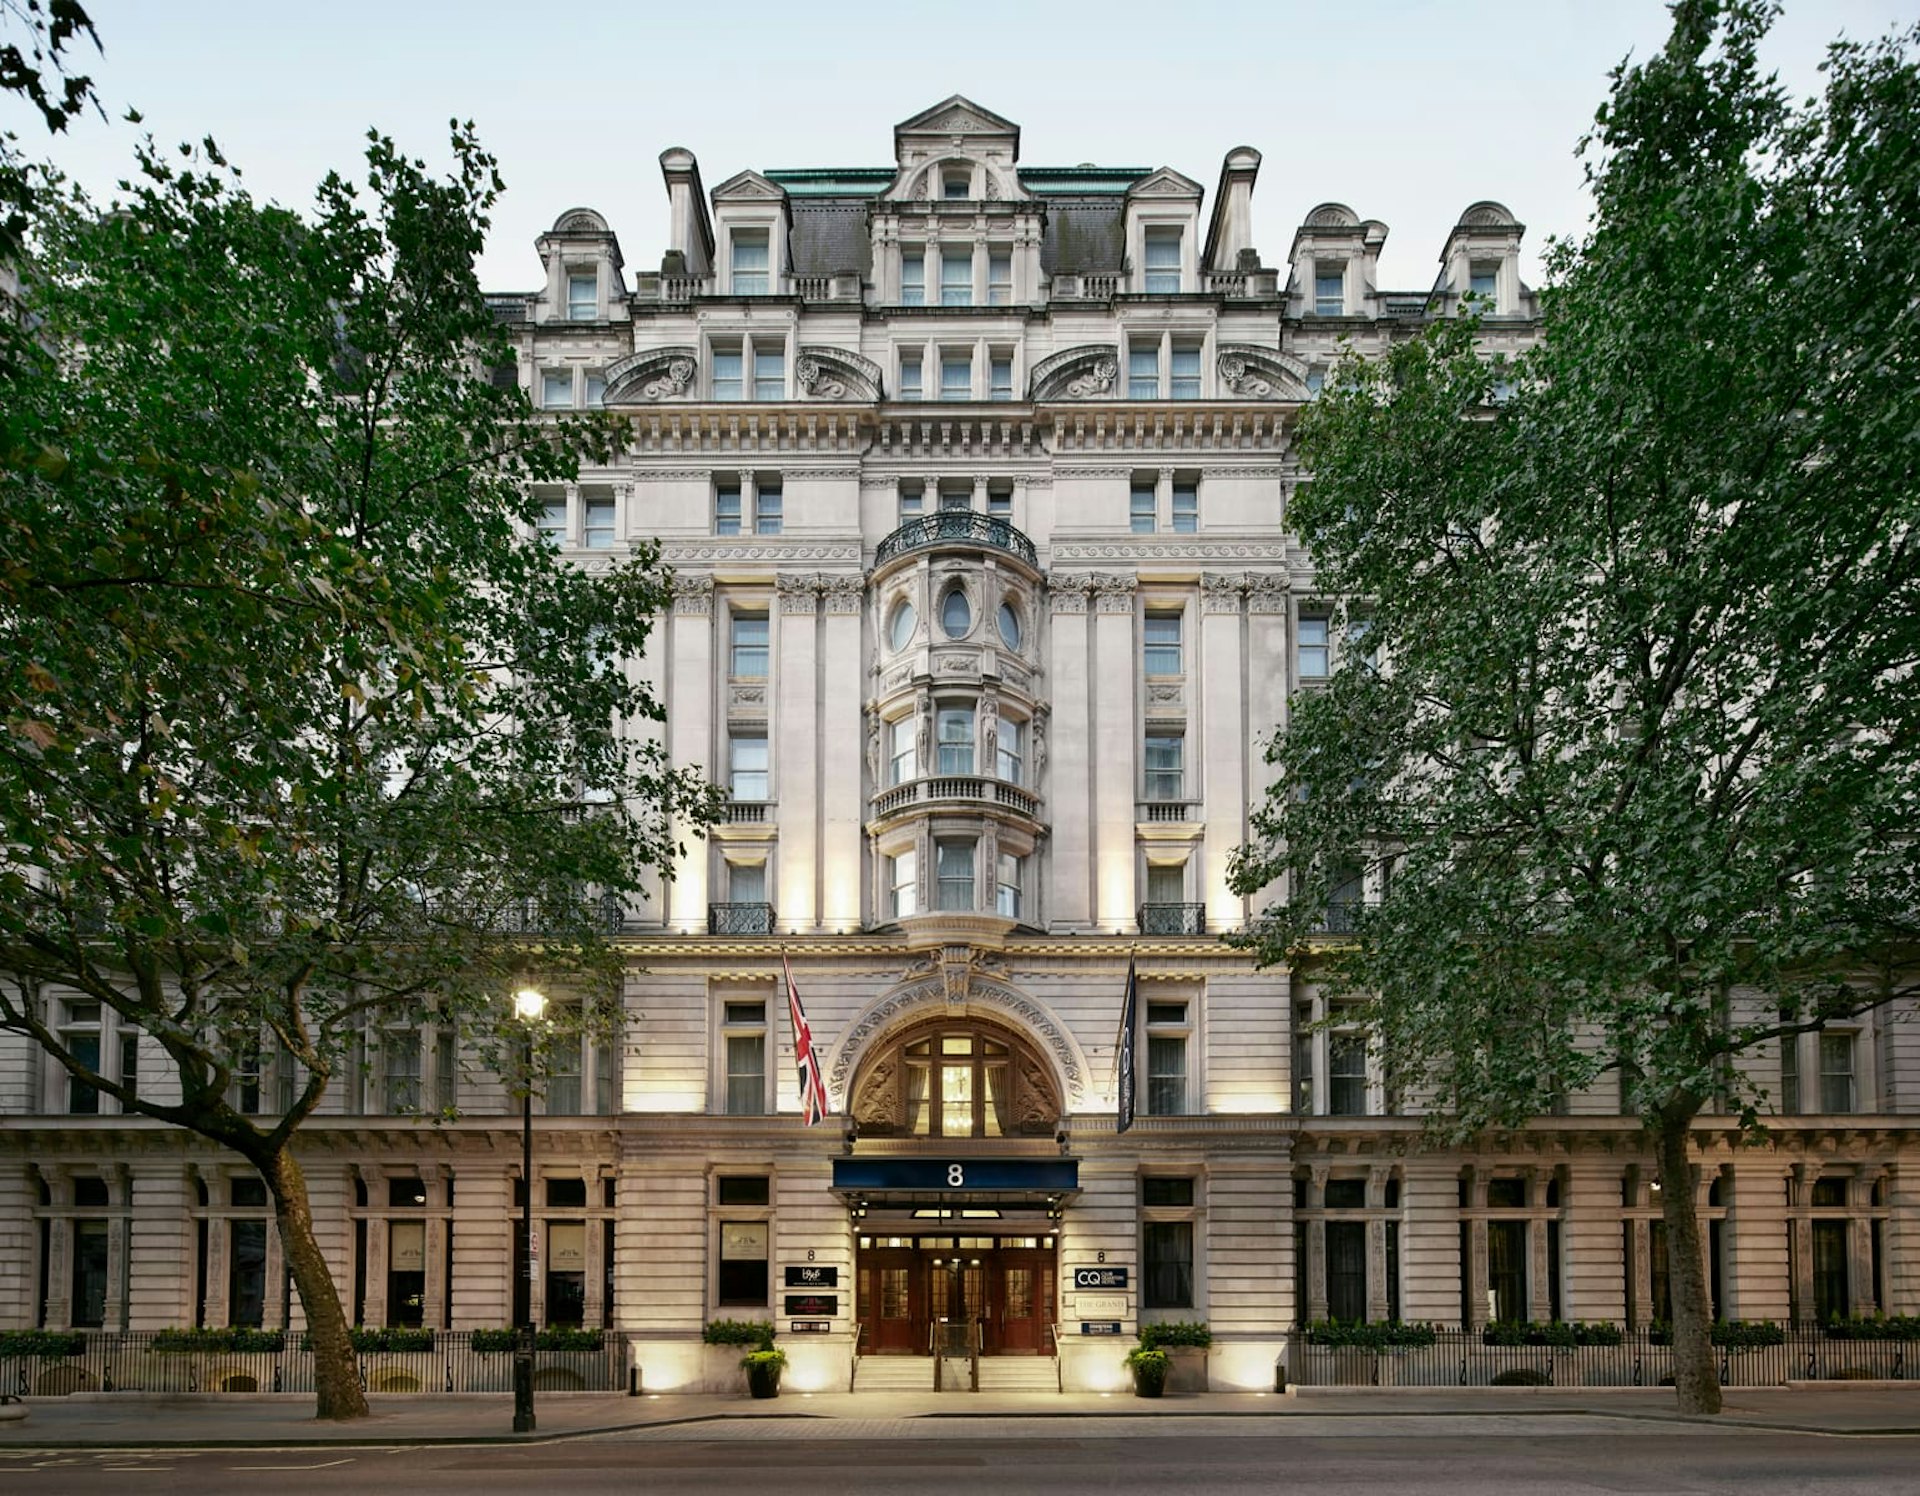 Exterior of CQ hotel, Trafalgar Square, London